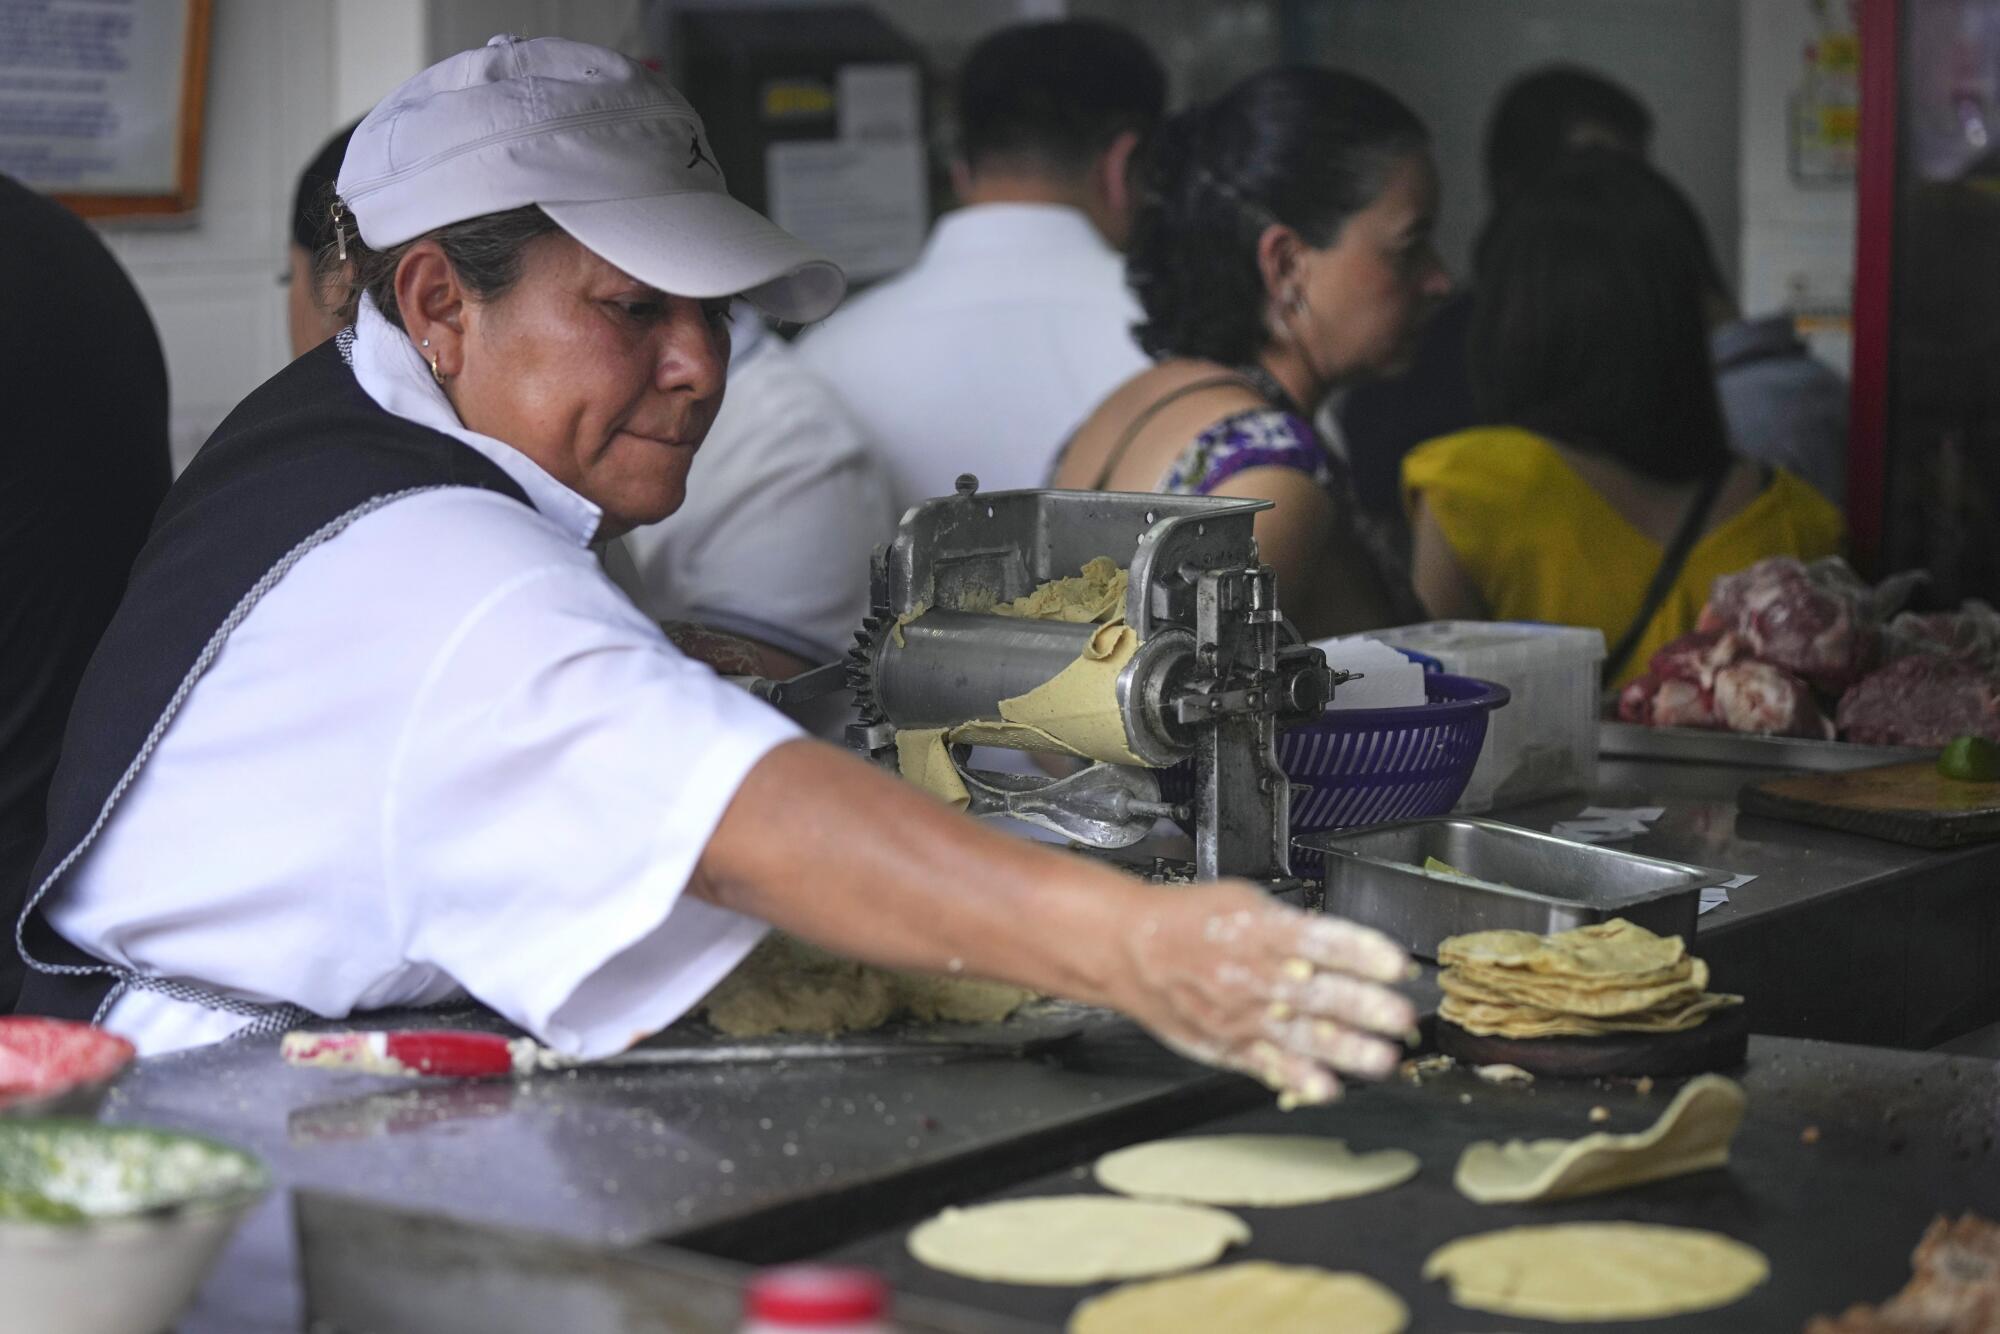 An employee tosses a tortilla on a griddle at El Califa de León.